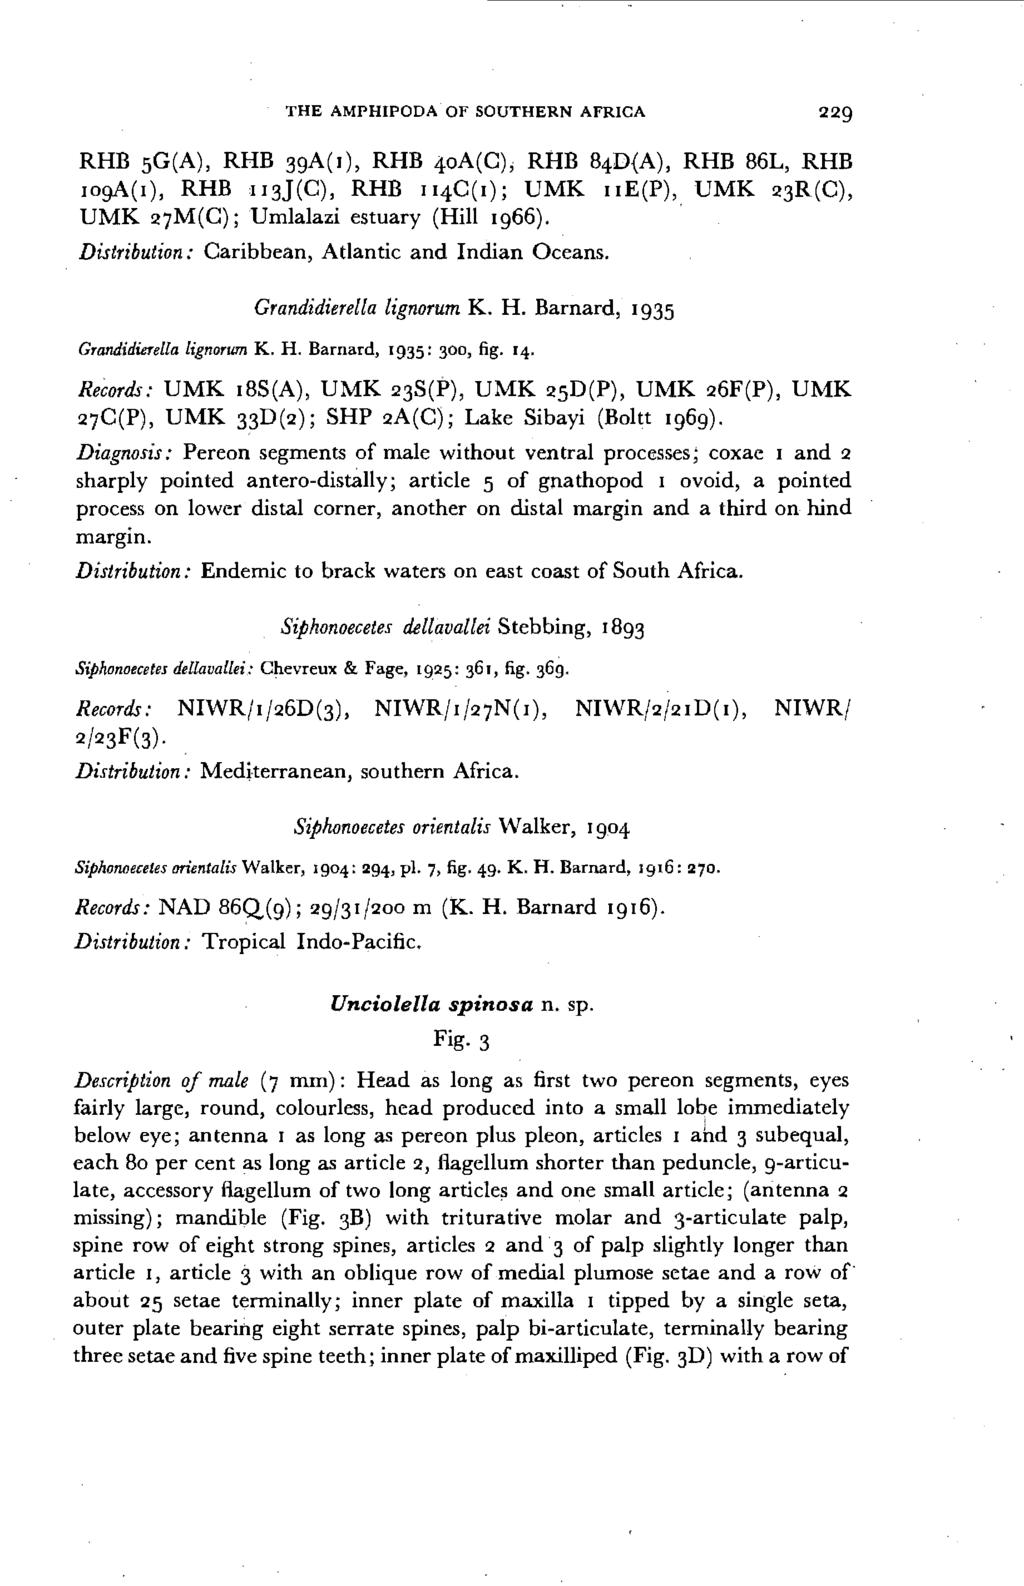 THE AMPHIPODA OF SOUTHERN AFRICA 229 RHB 5G(A), RHB 39A(I), RHB 4oA(C); RHB 84D{A), RHB 86L, RHB IOgA(I), RHB 1I3J(c), RHB 114C(I); UMK IIE(P), UMK 23R(C), UMK 27M(C); Umlalazi estuary (Hill 1966).